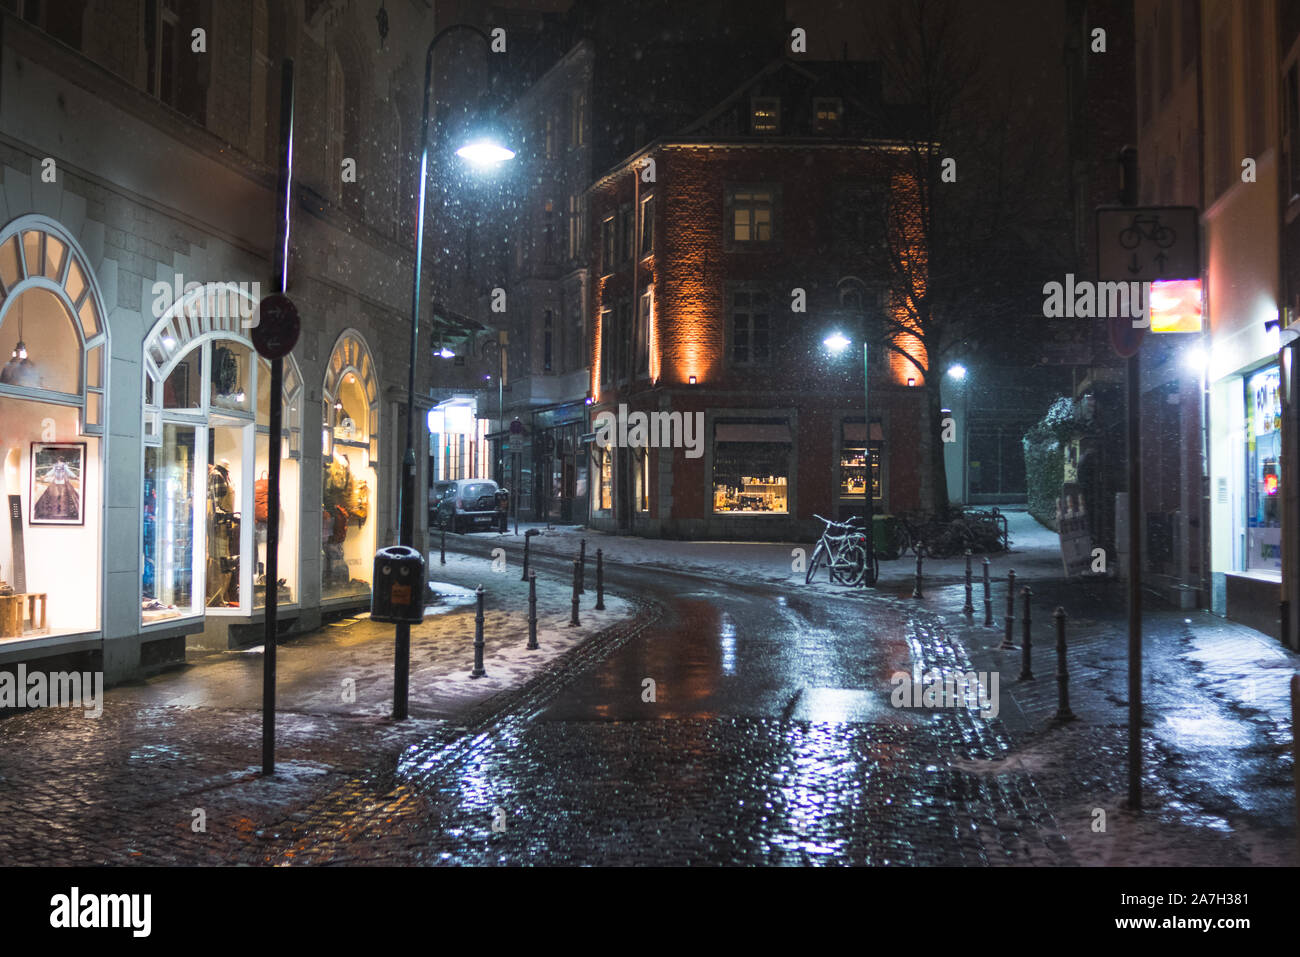 Snowy empty street at night in Aachen, Germany Stock Photo